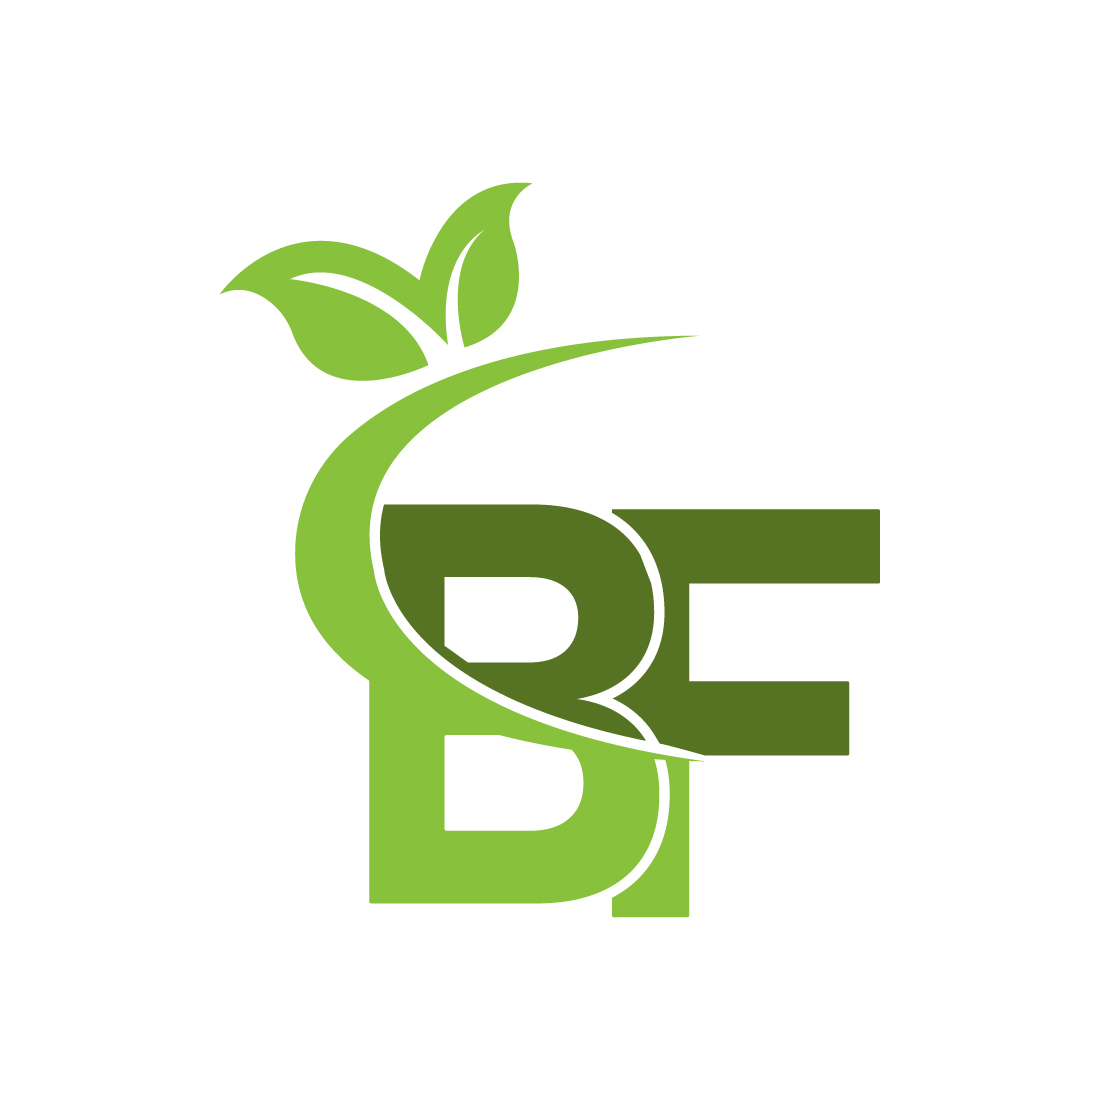 Initials BF letters logo design vector images Green leaf BF logo best icon Natural leaf logo design BF vegetable logo design FB logo template best brand preview image.